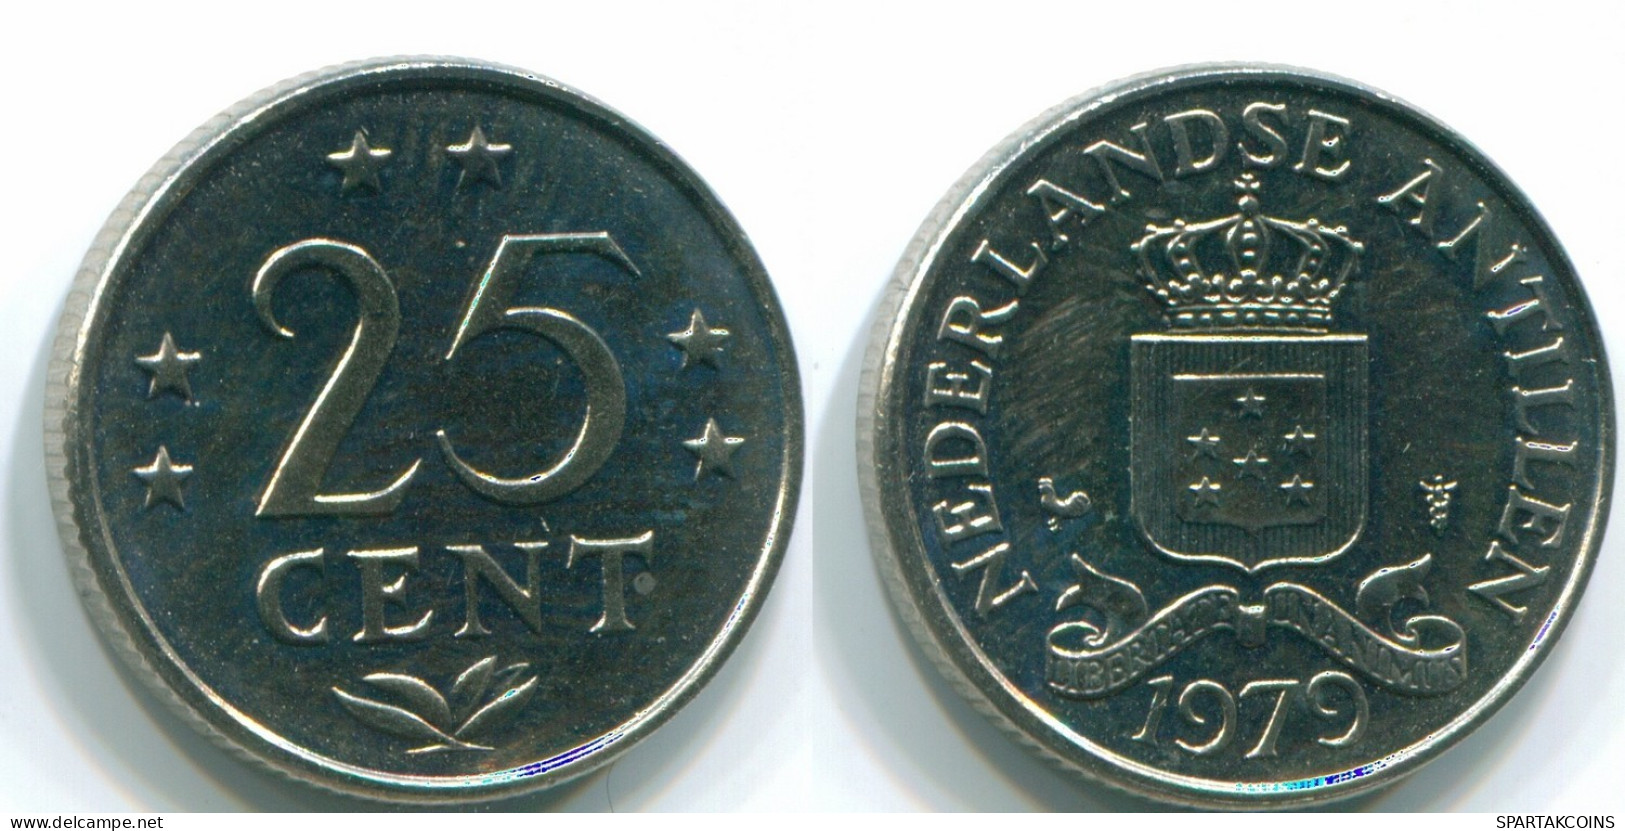 25 CENTS 1979 NETHERLANDS ANTILLES Nickel Colonial Coin #S11651.U.A - Nederlandse Antillen